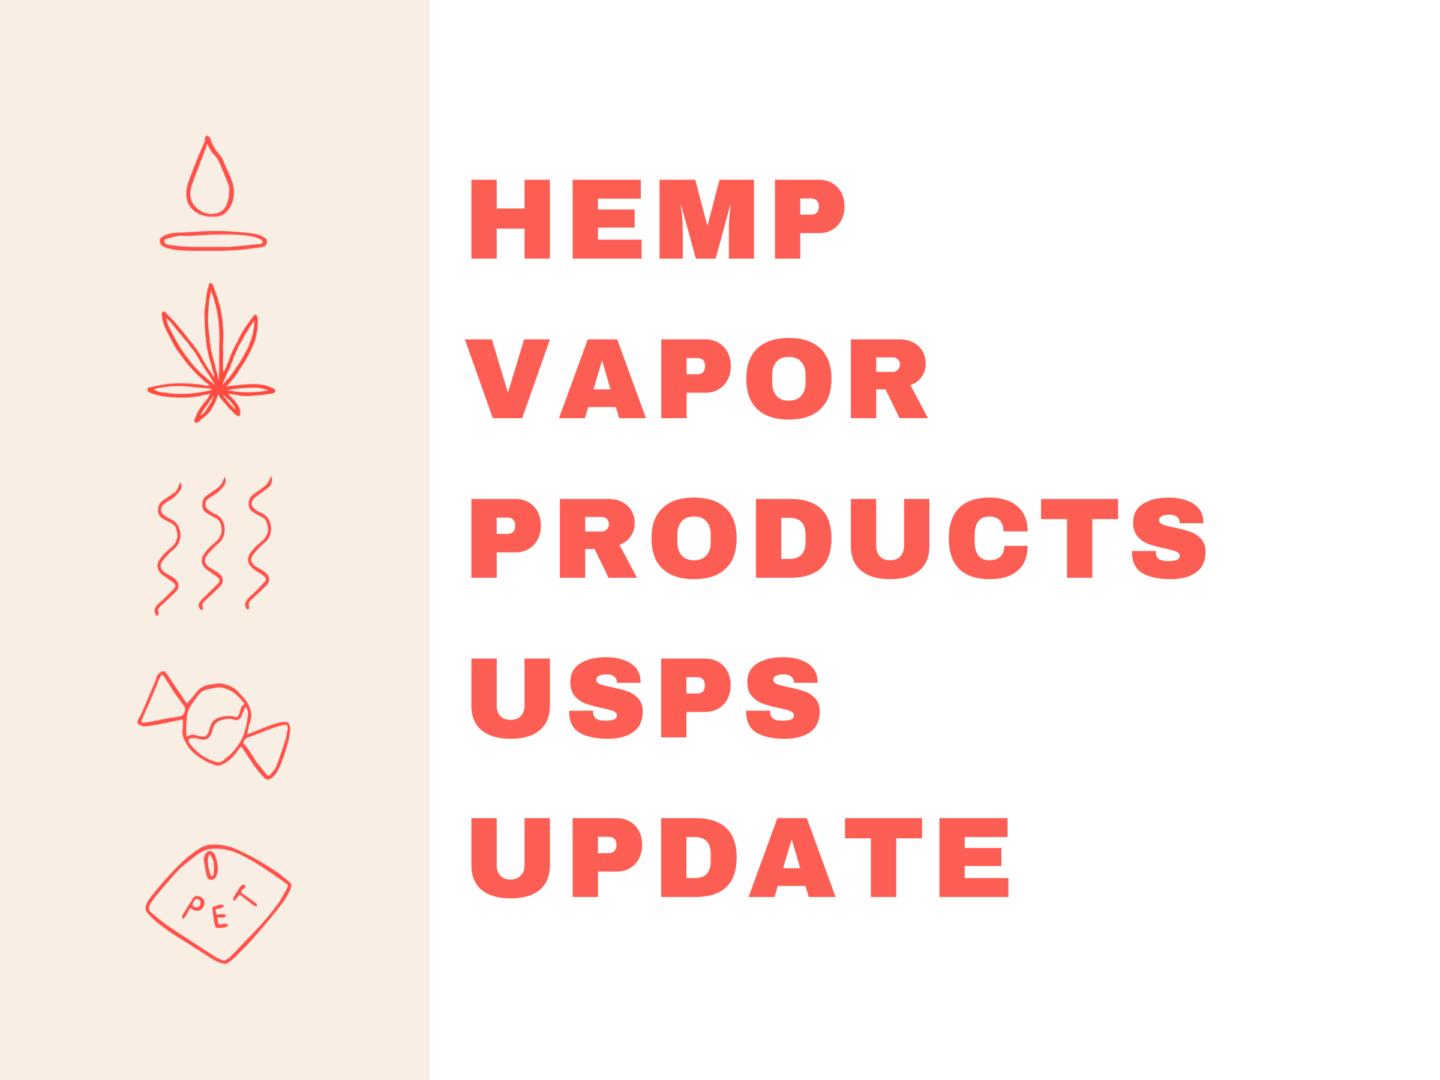 Hemp vapor products USPS update